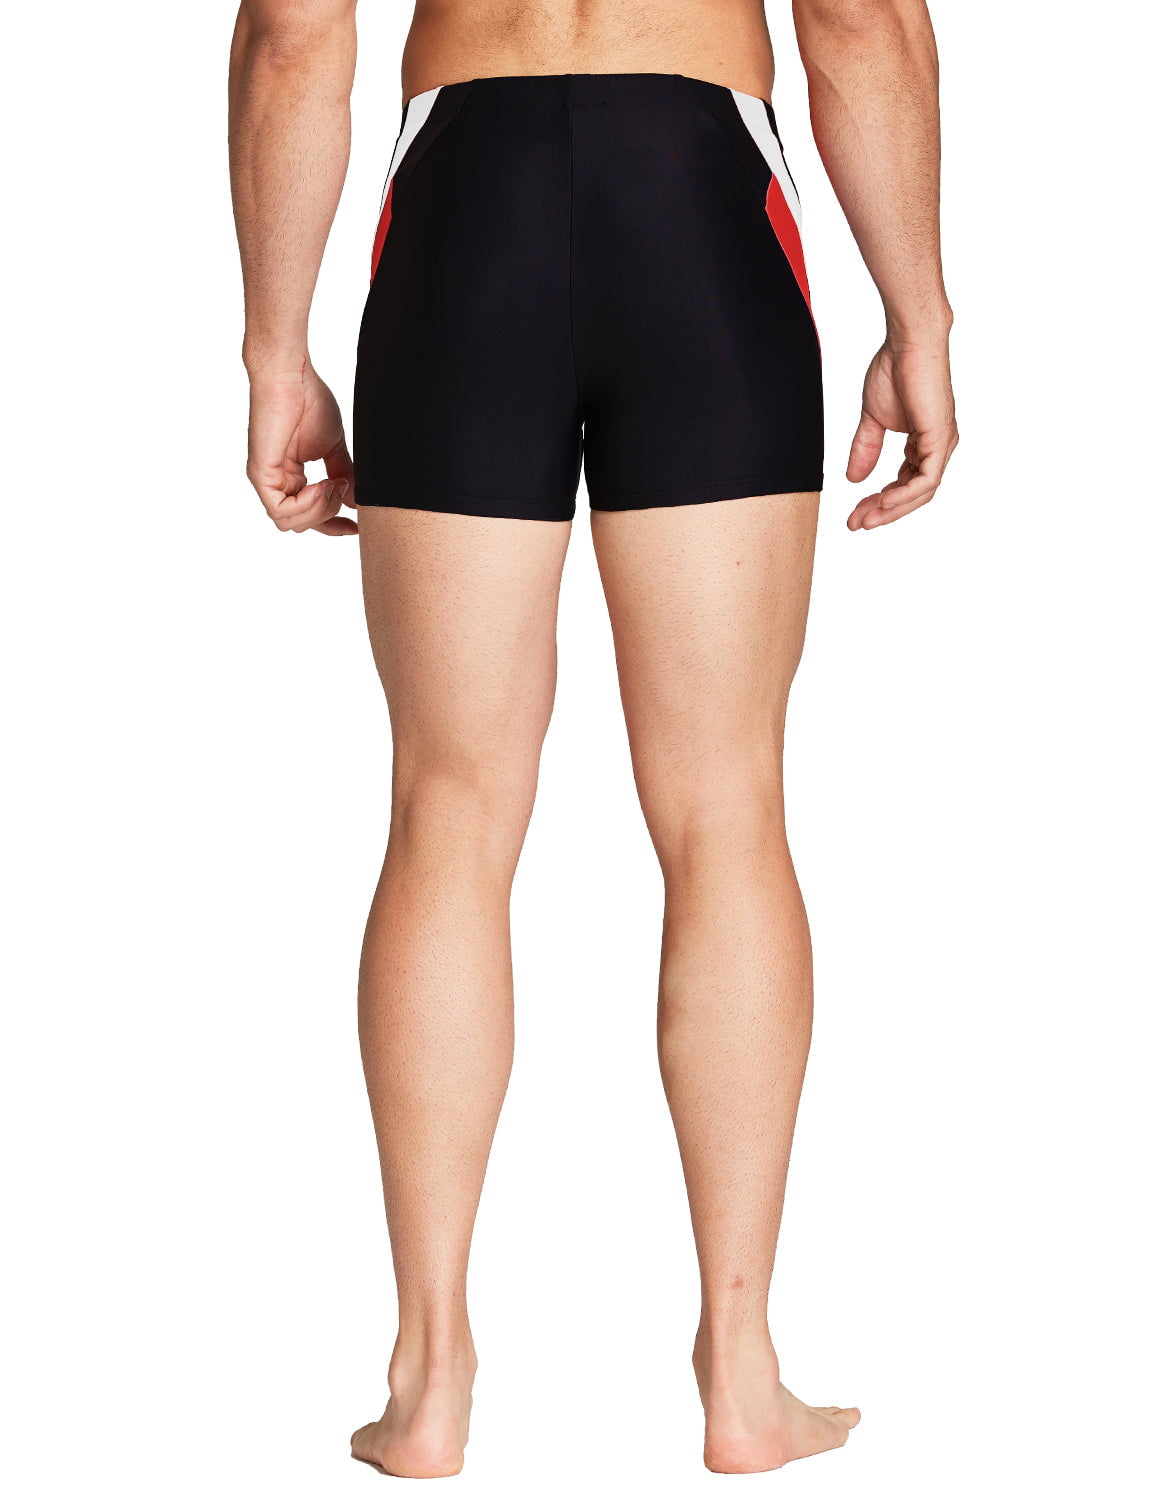 BALEAF Mens' Athletic Quick Dry Compression Square Leg Jammers Swim Brief Swimsuit Black Orange Sise 